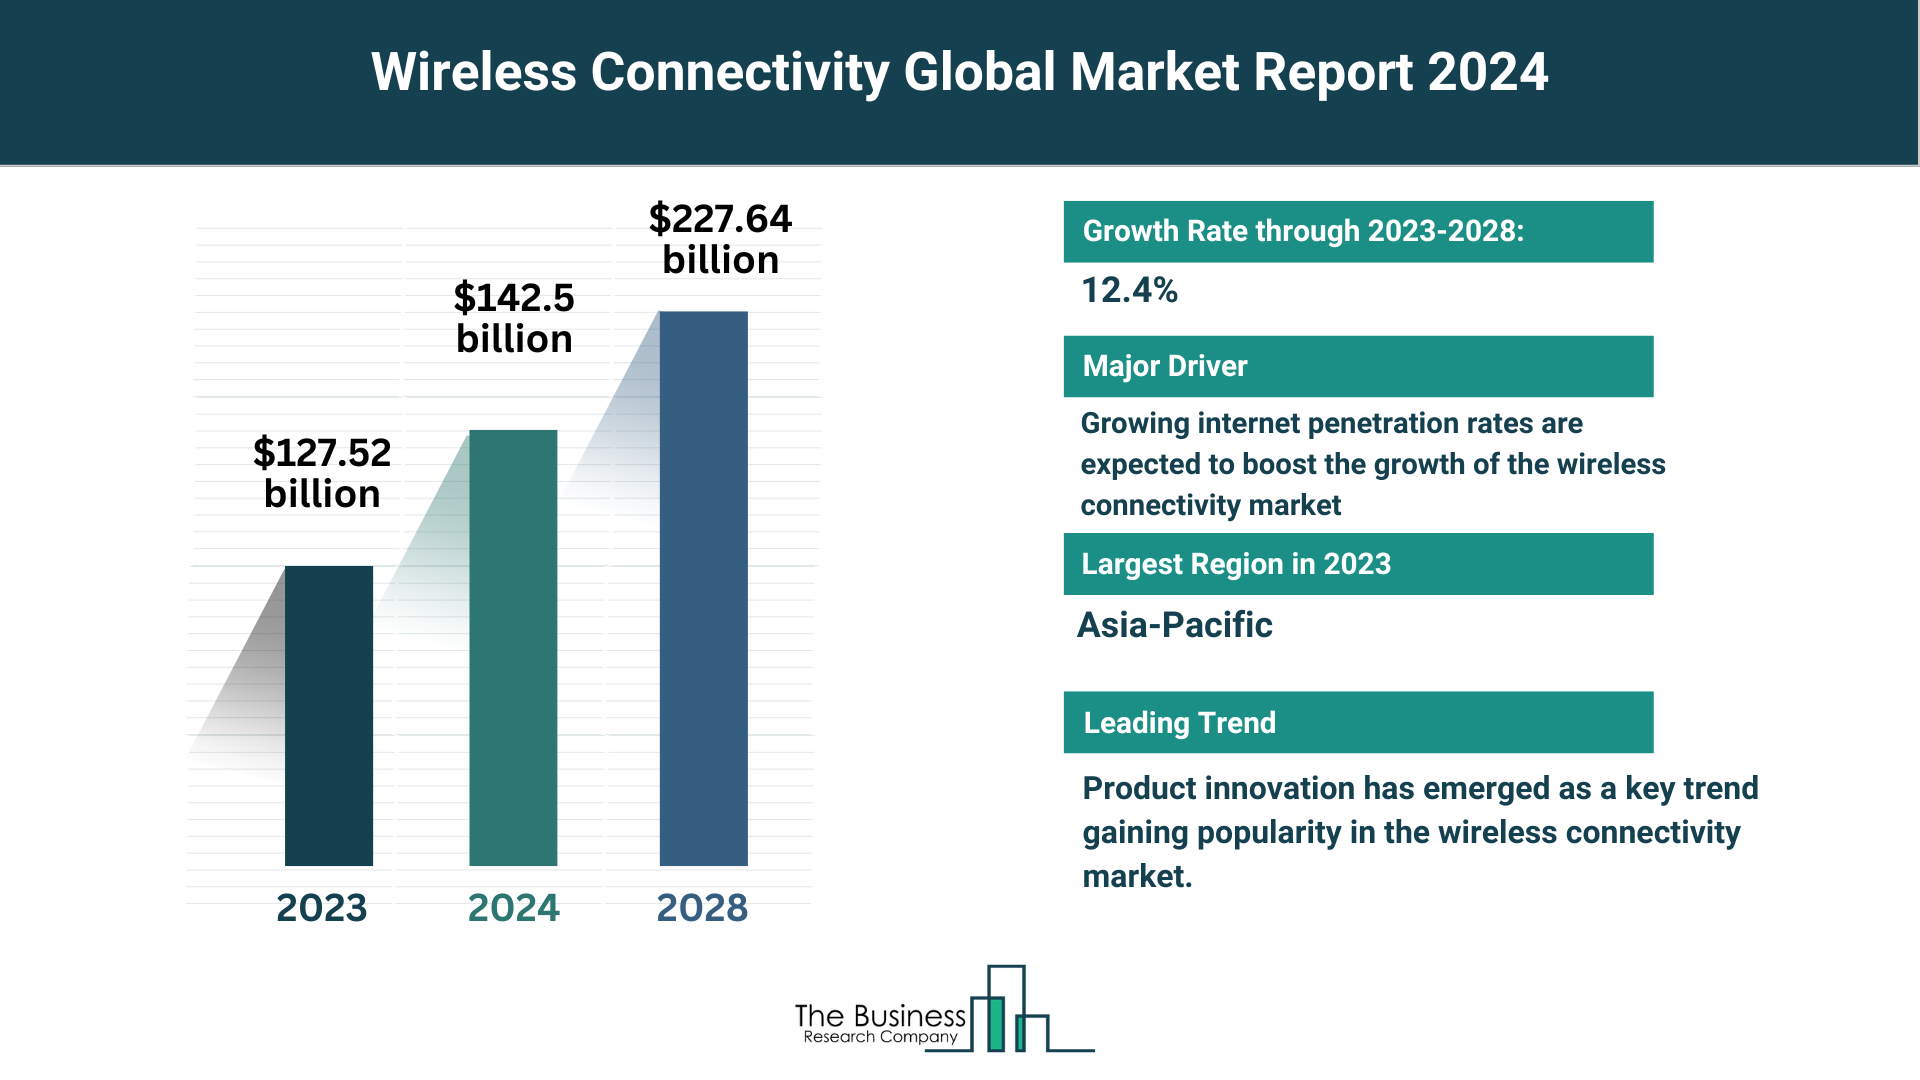 Global Wireless Connectivity Market